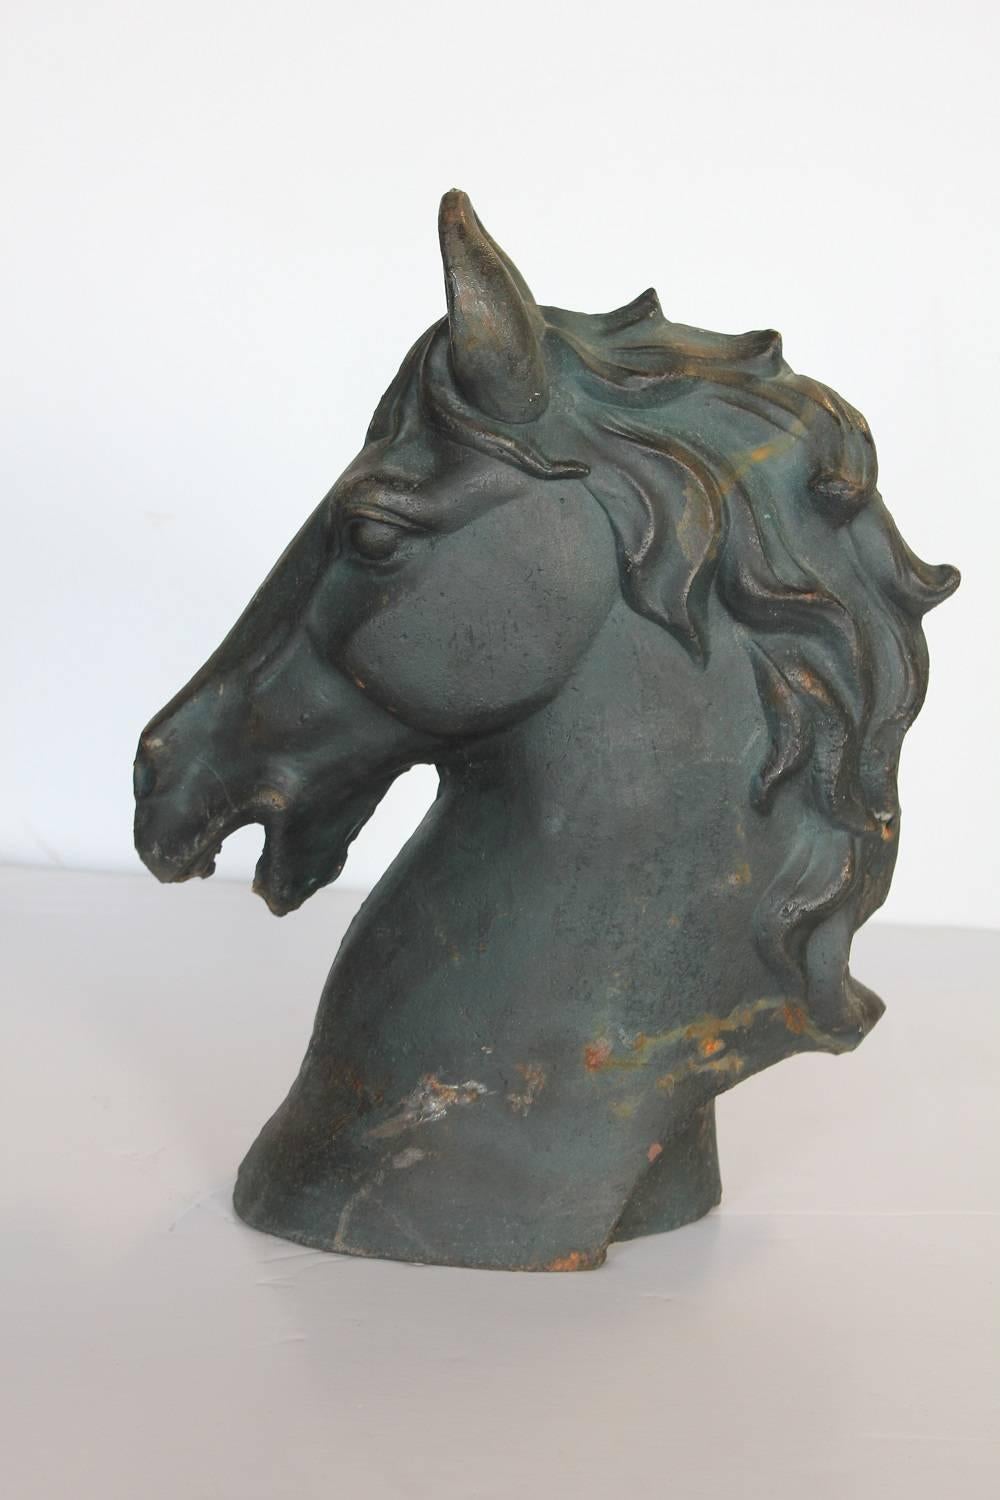 1900s American cast iron horse head sculpture.